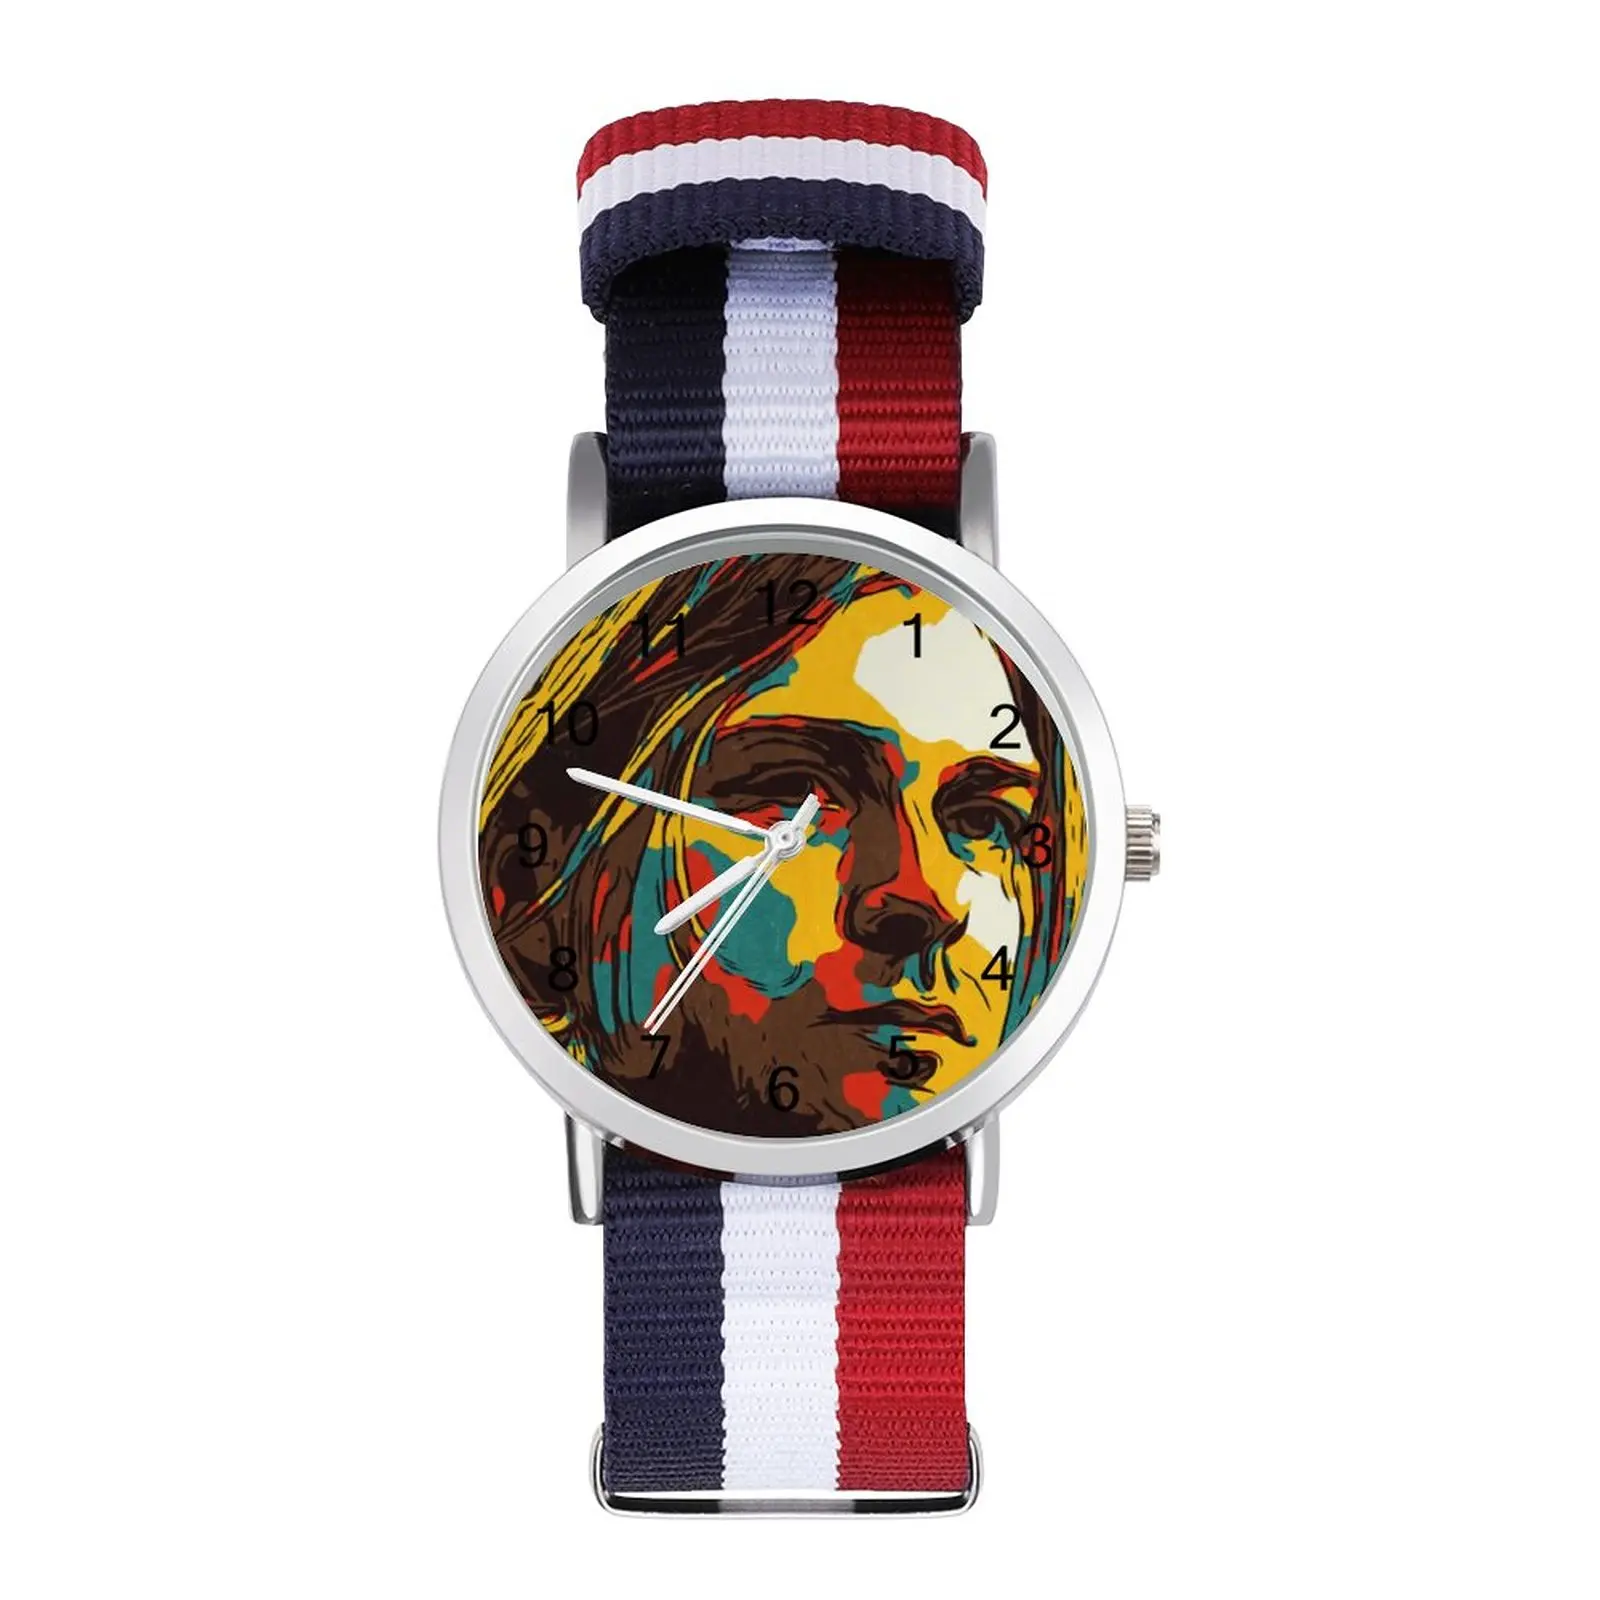 Kurt Cobain Quartz Watch Design Female Wrist Watch Fitness Neat Fashion Wristwatch